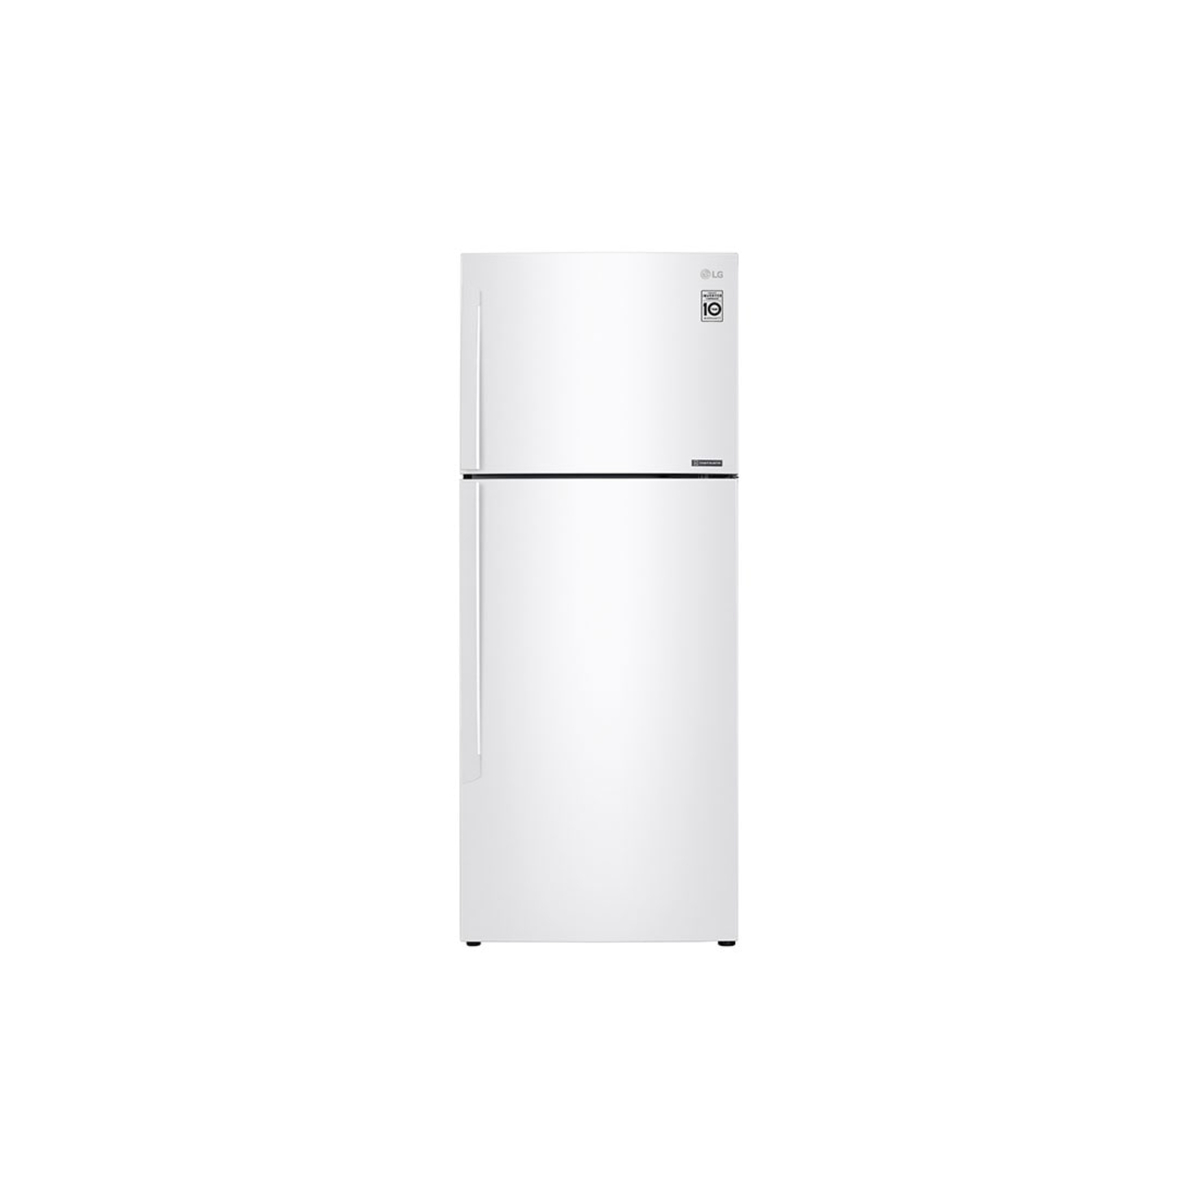 LG Double Door Refrigerator with Smart Inverter Compressor, 438 L, Super White, GR-C629HQCL